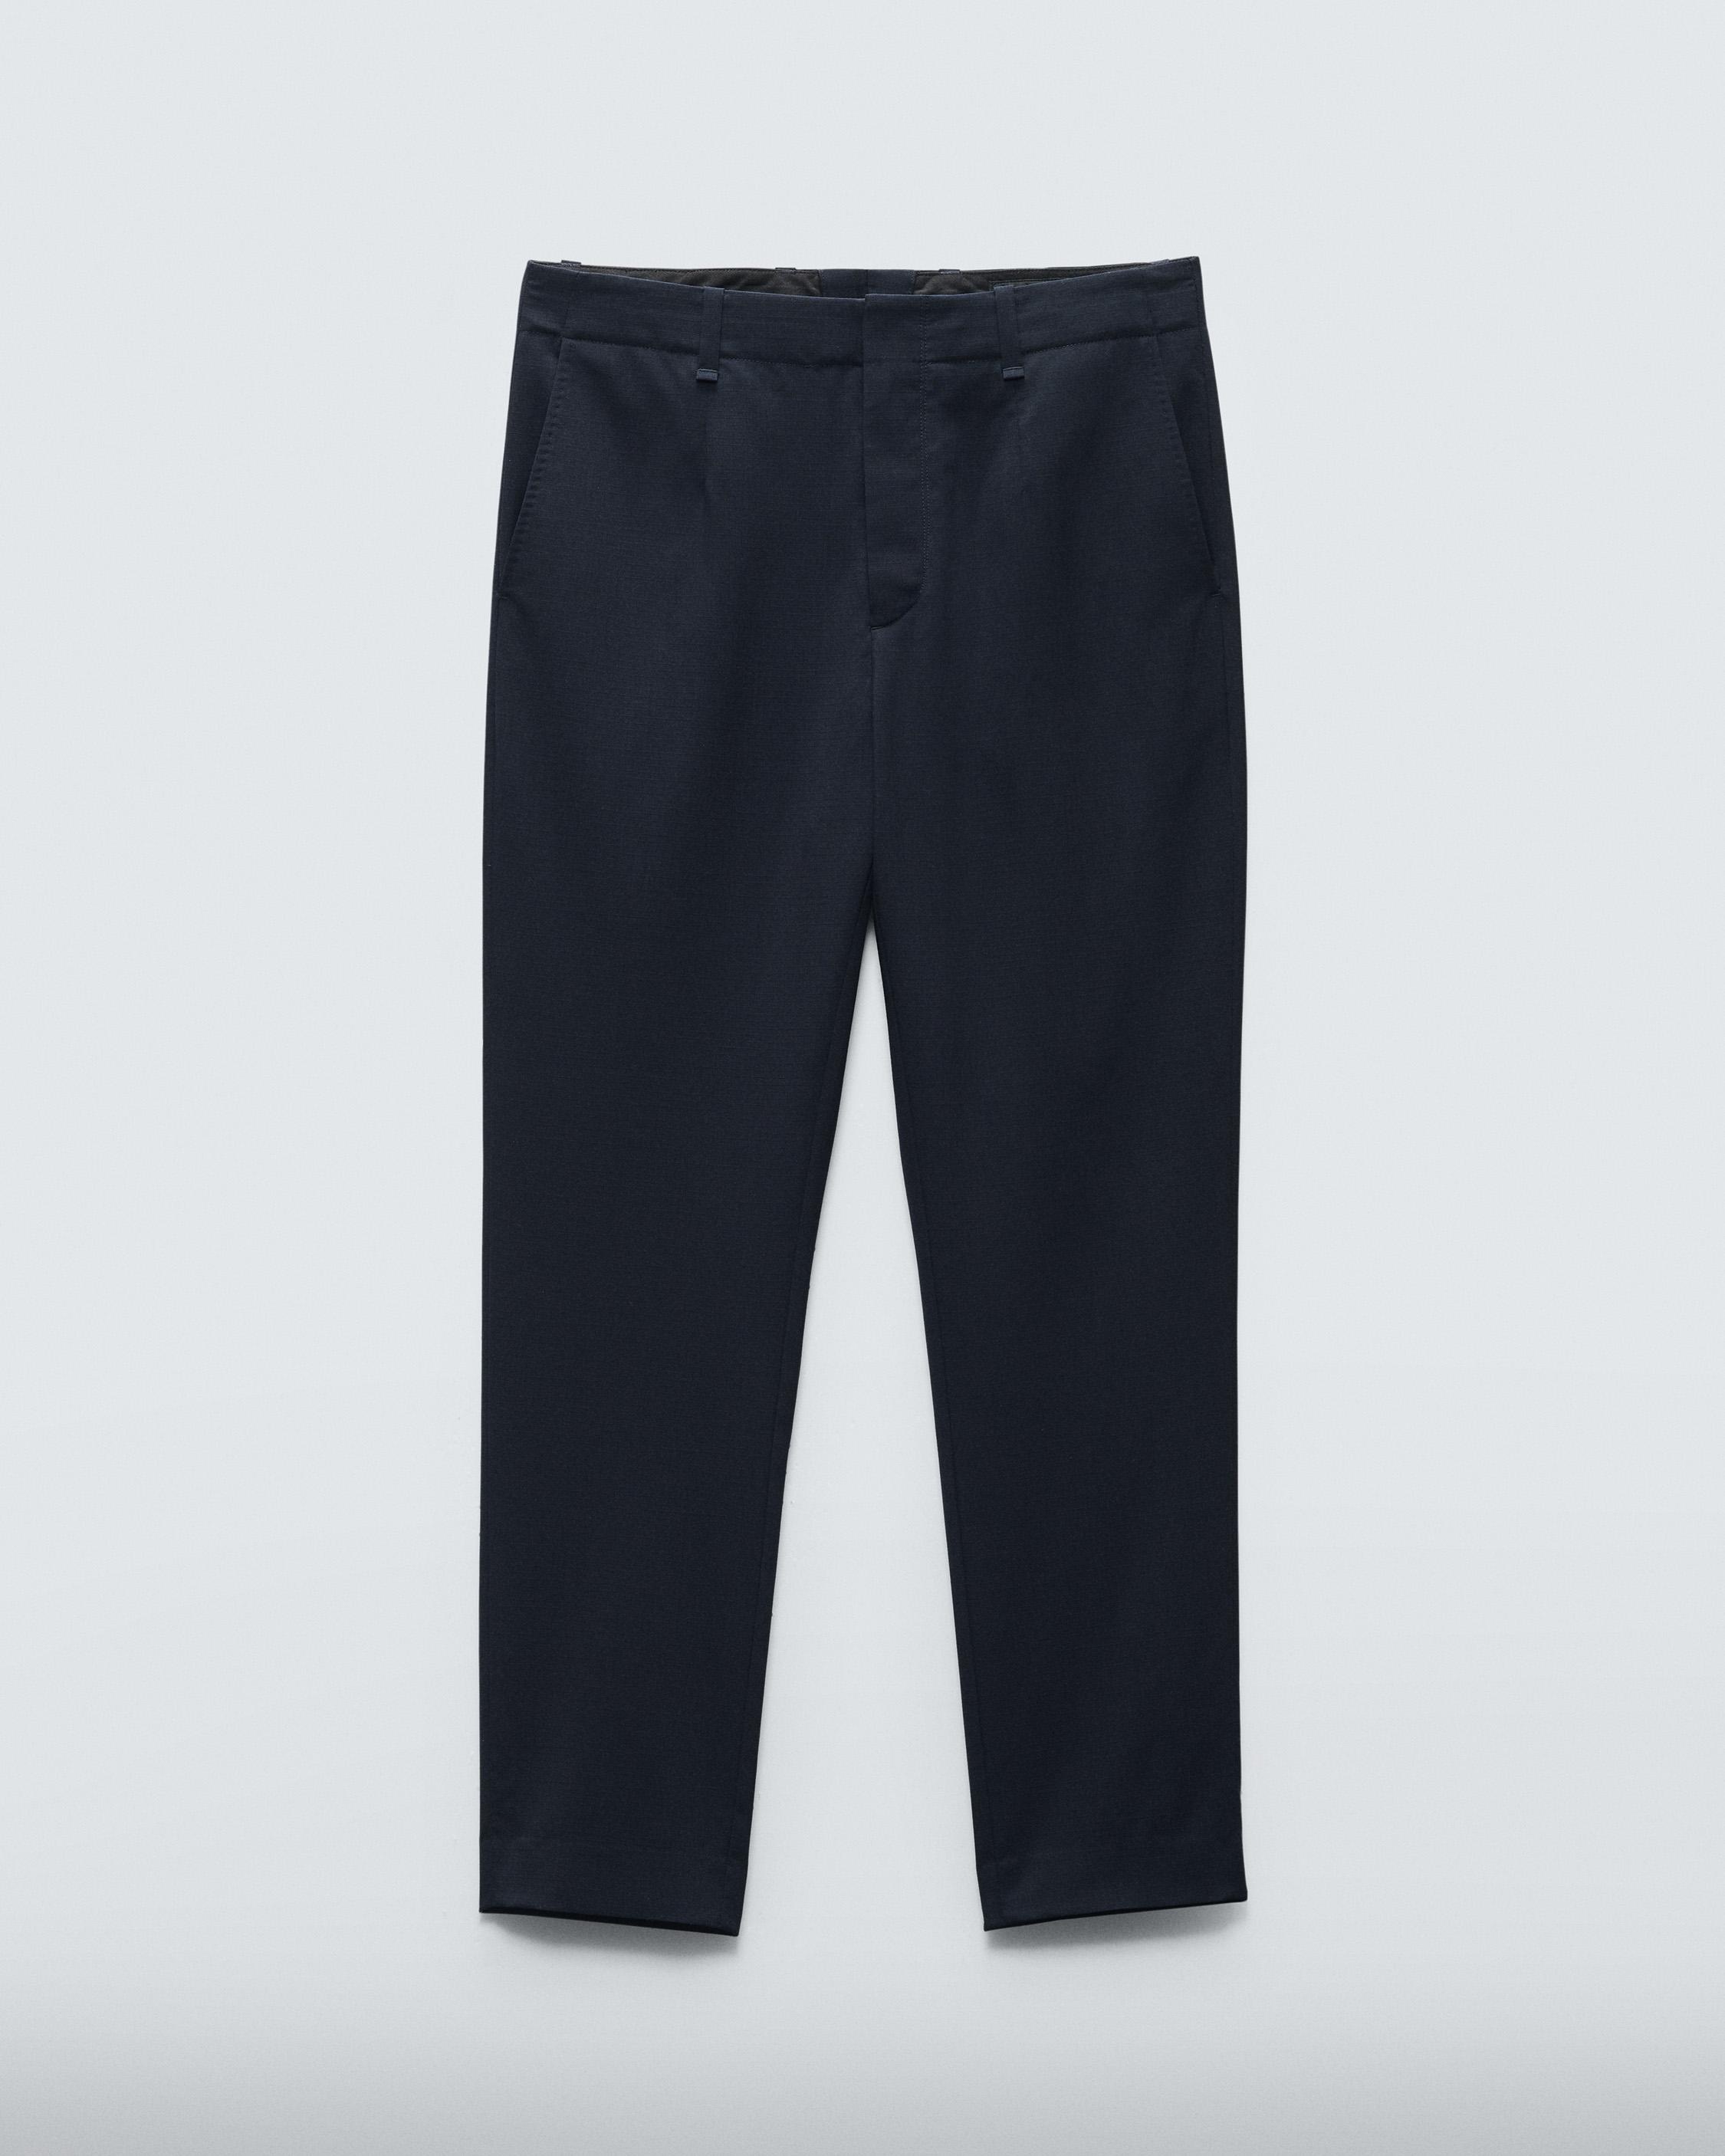 Lennox Tropical Wool Trouser
Slim Fit - 1